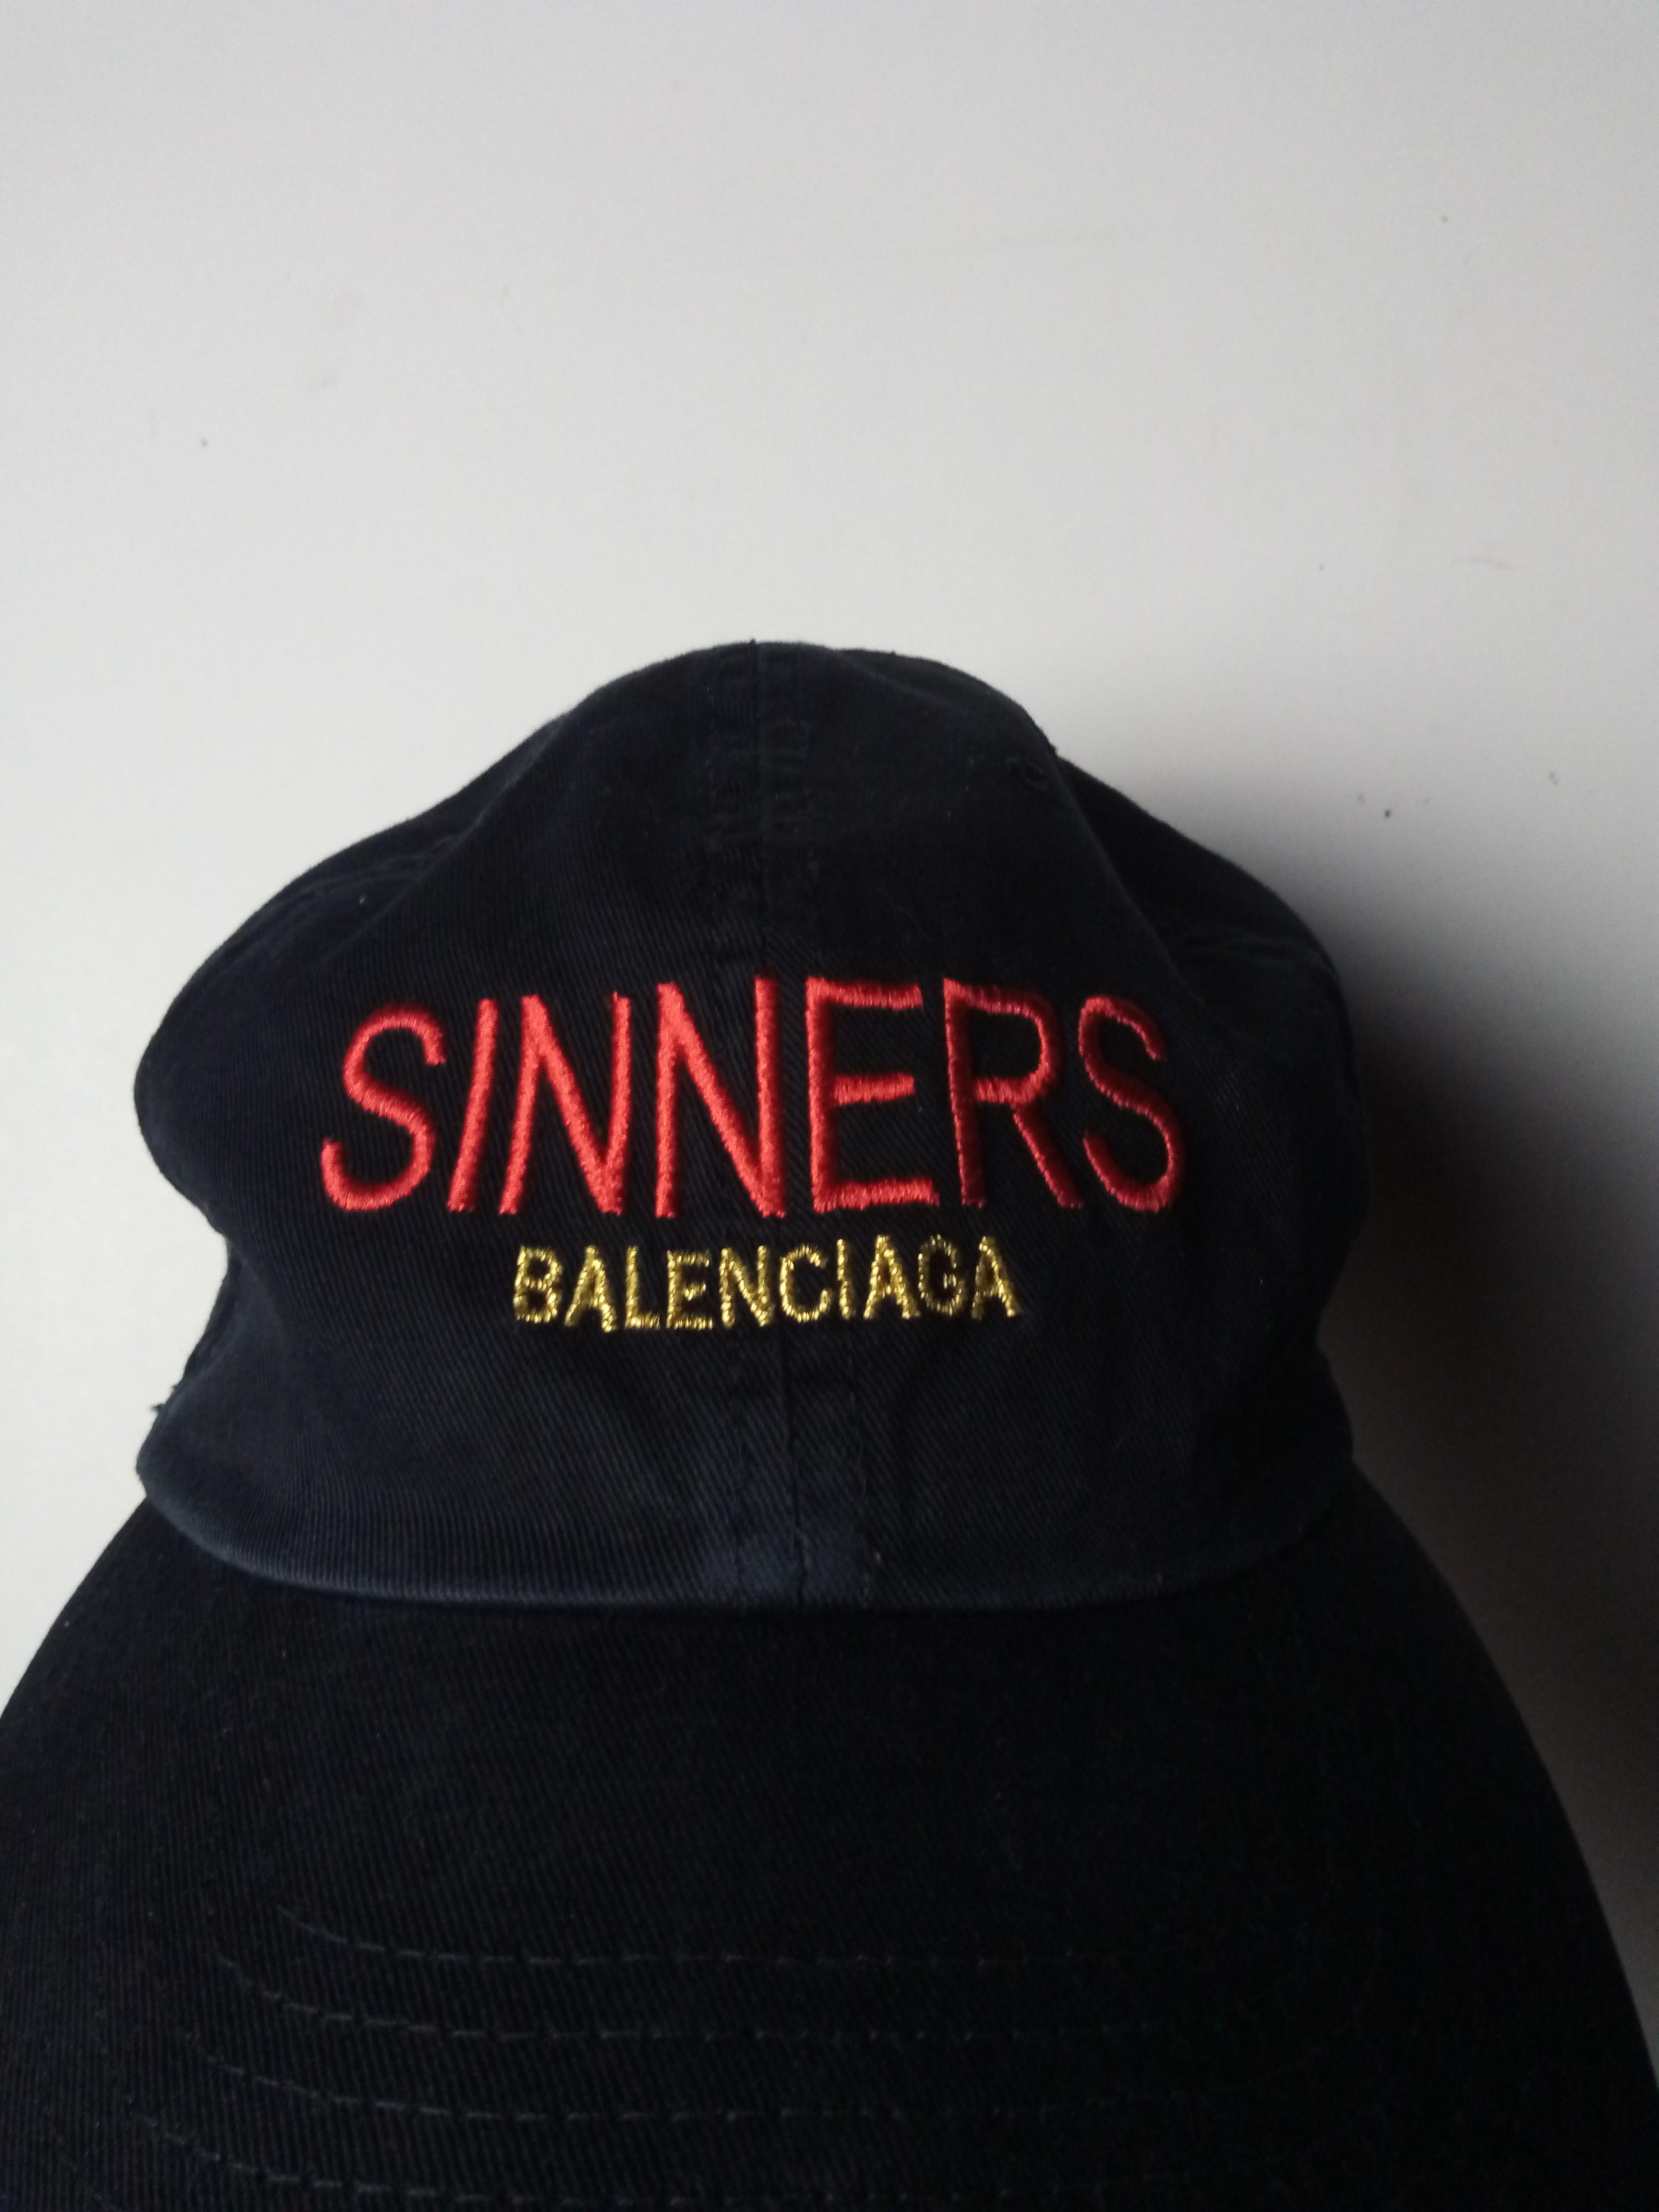 Balenciaga - BALENCIAGA SINNERS バレンシアガ キャップ L 59cmの+